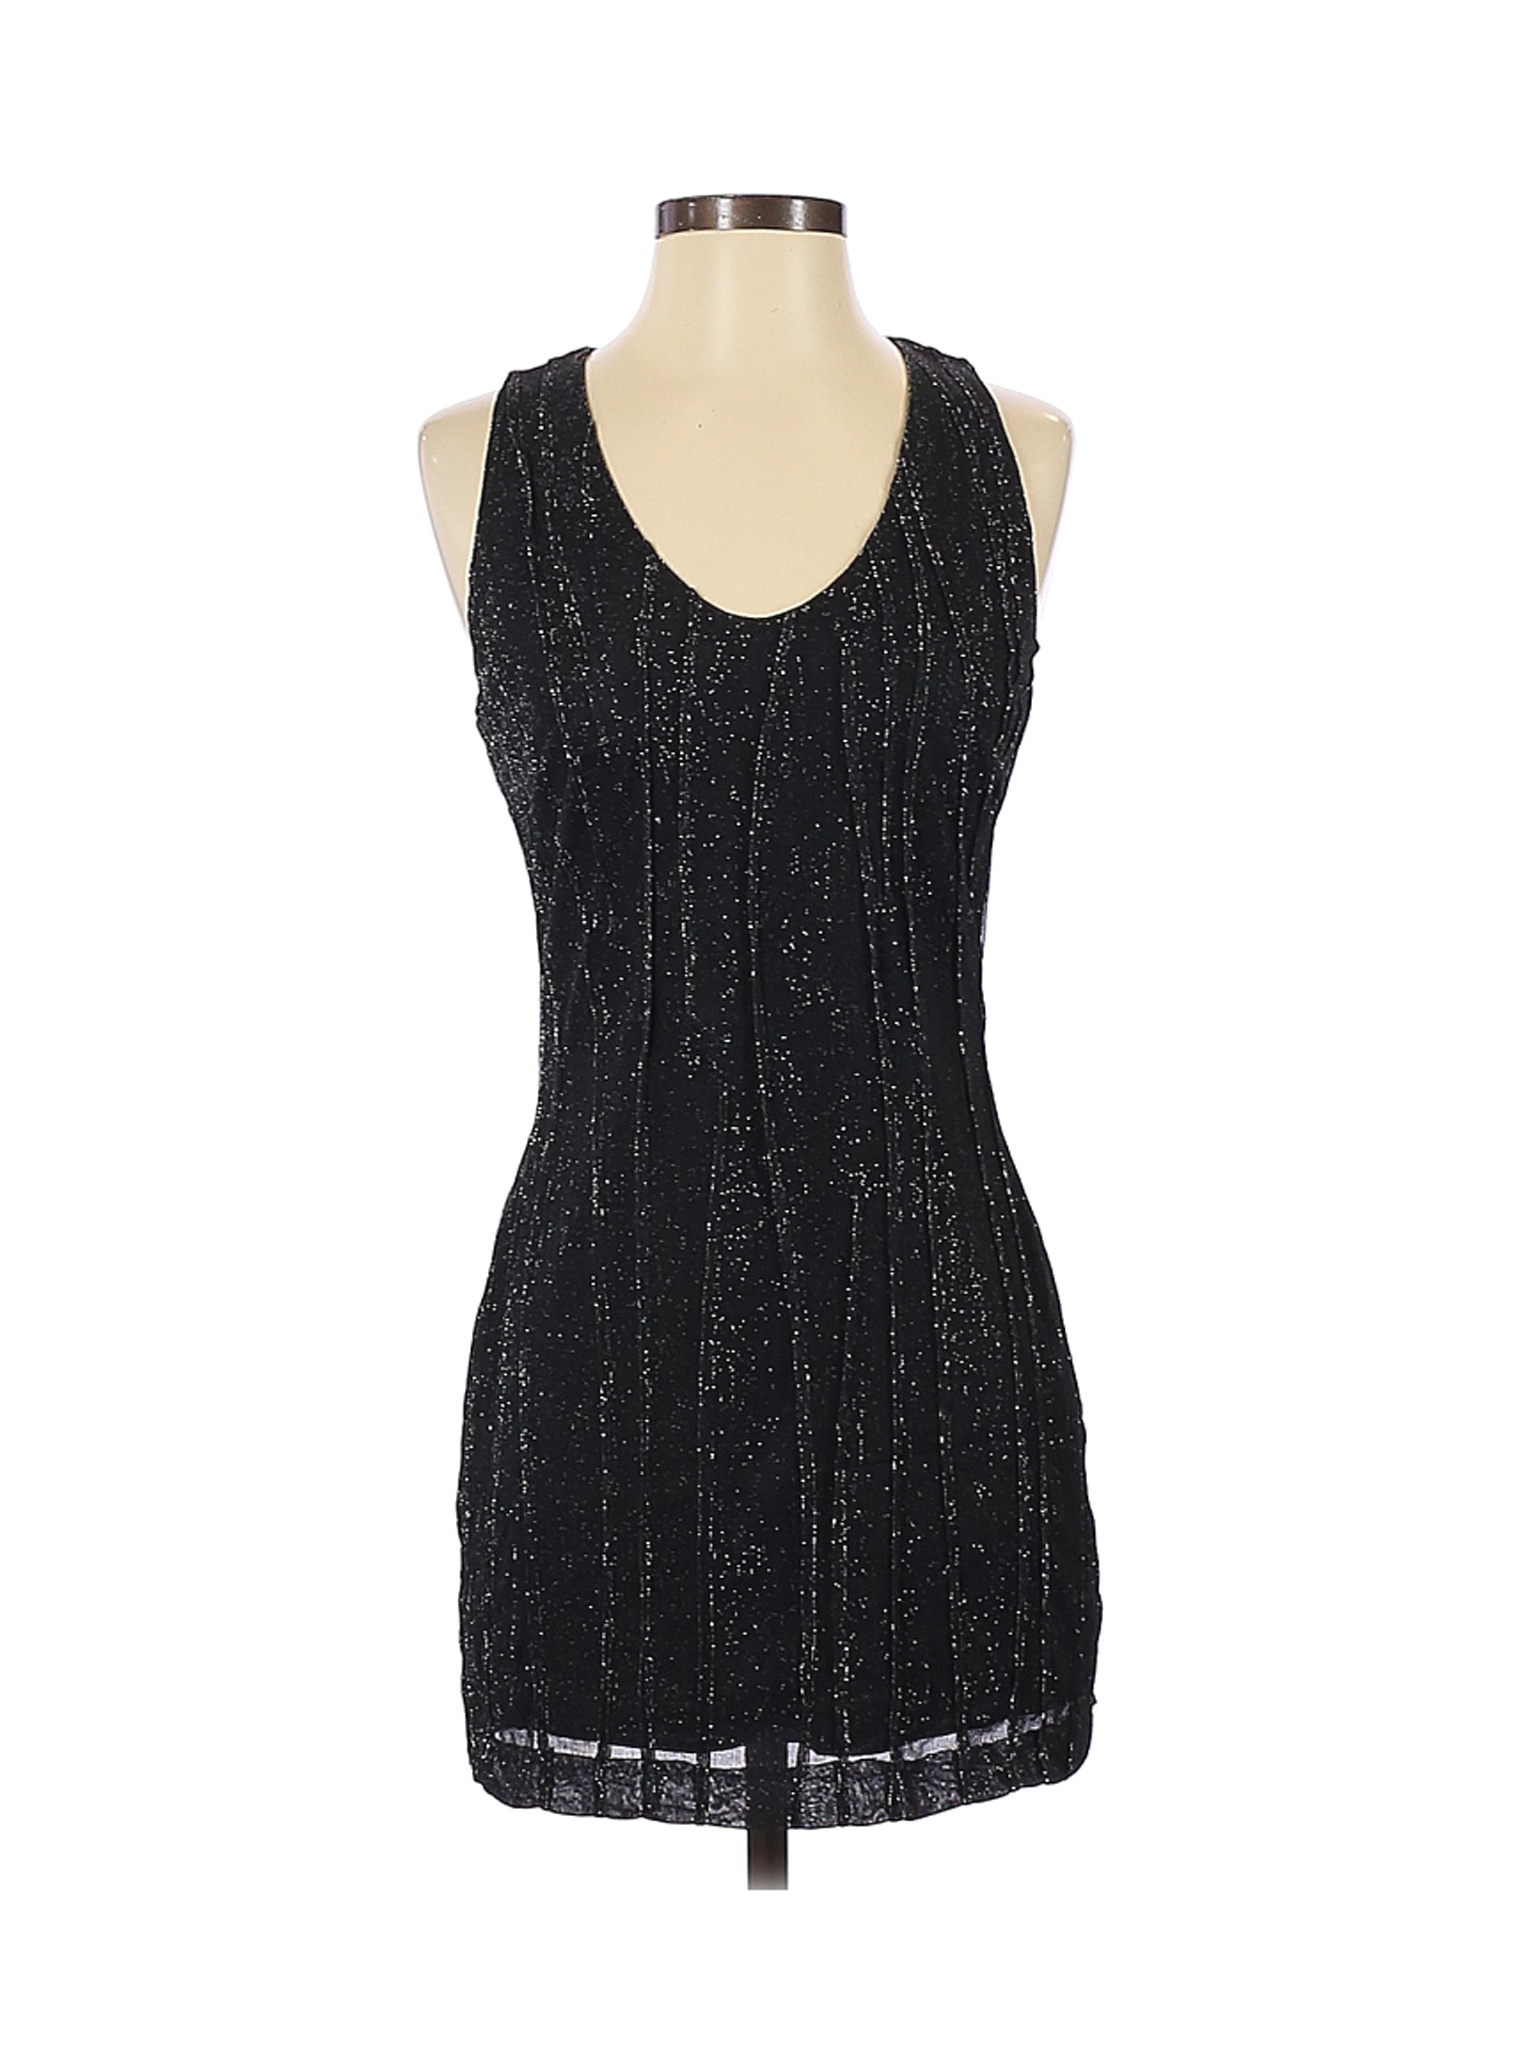 Andrea Polizzi for Rex Lester Women Black Cocktail Dress 2 | eBay